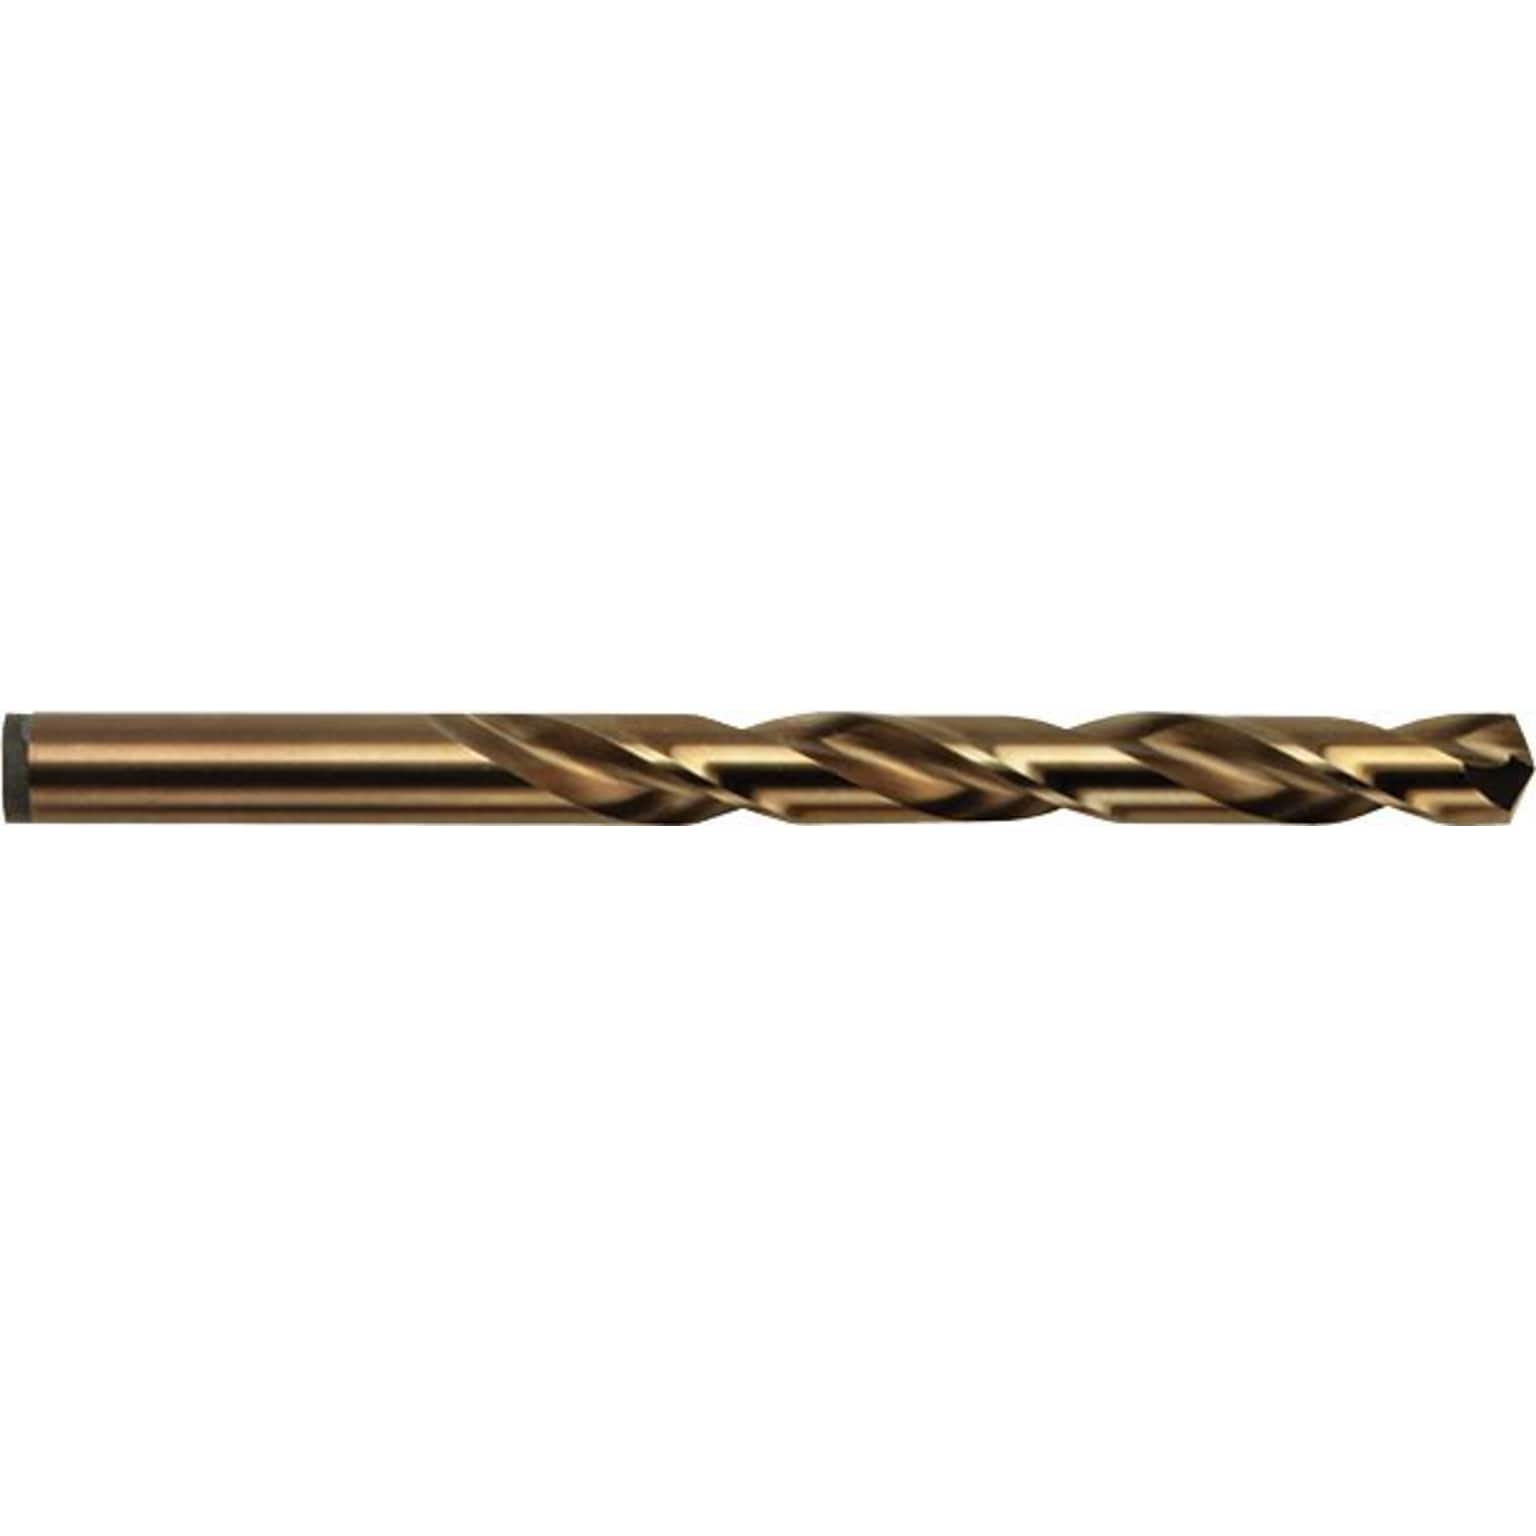 Irwin® Cobalt High Speed Steel Drill Bits, 1/4